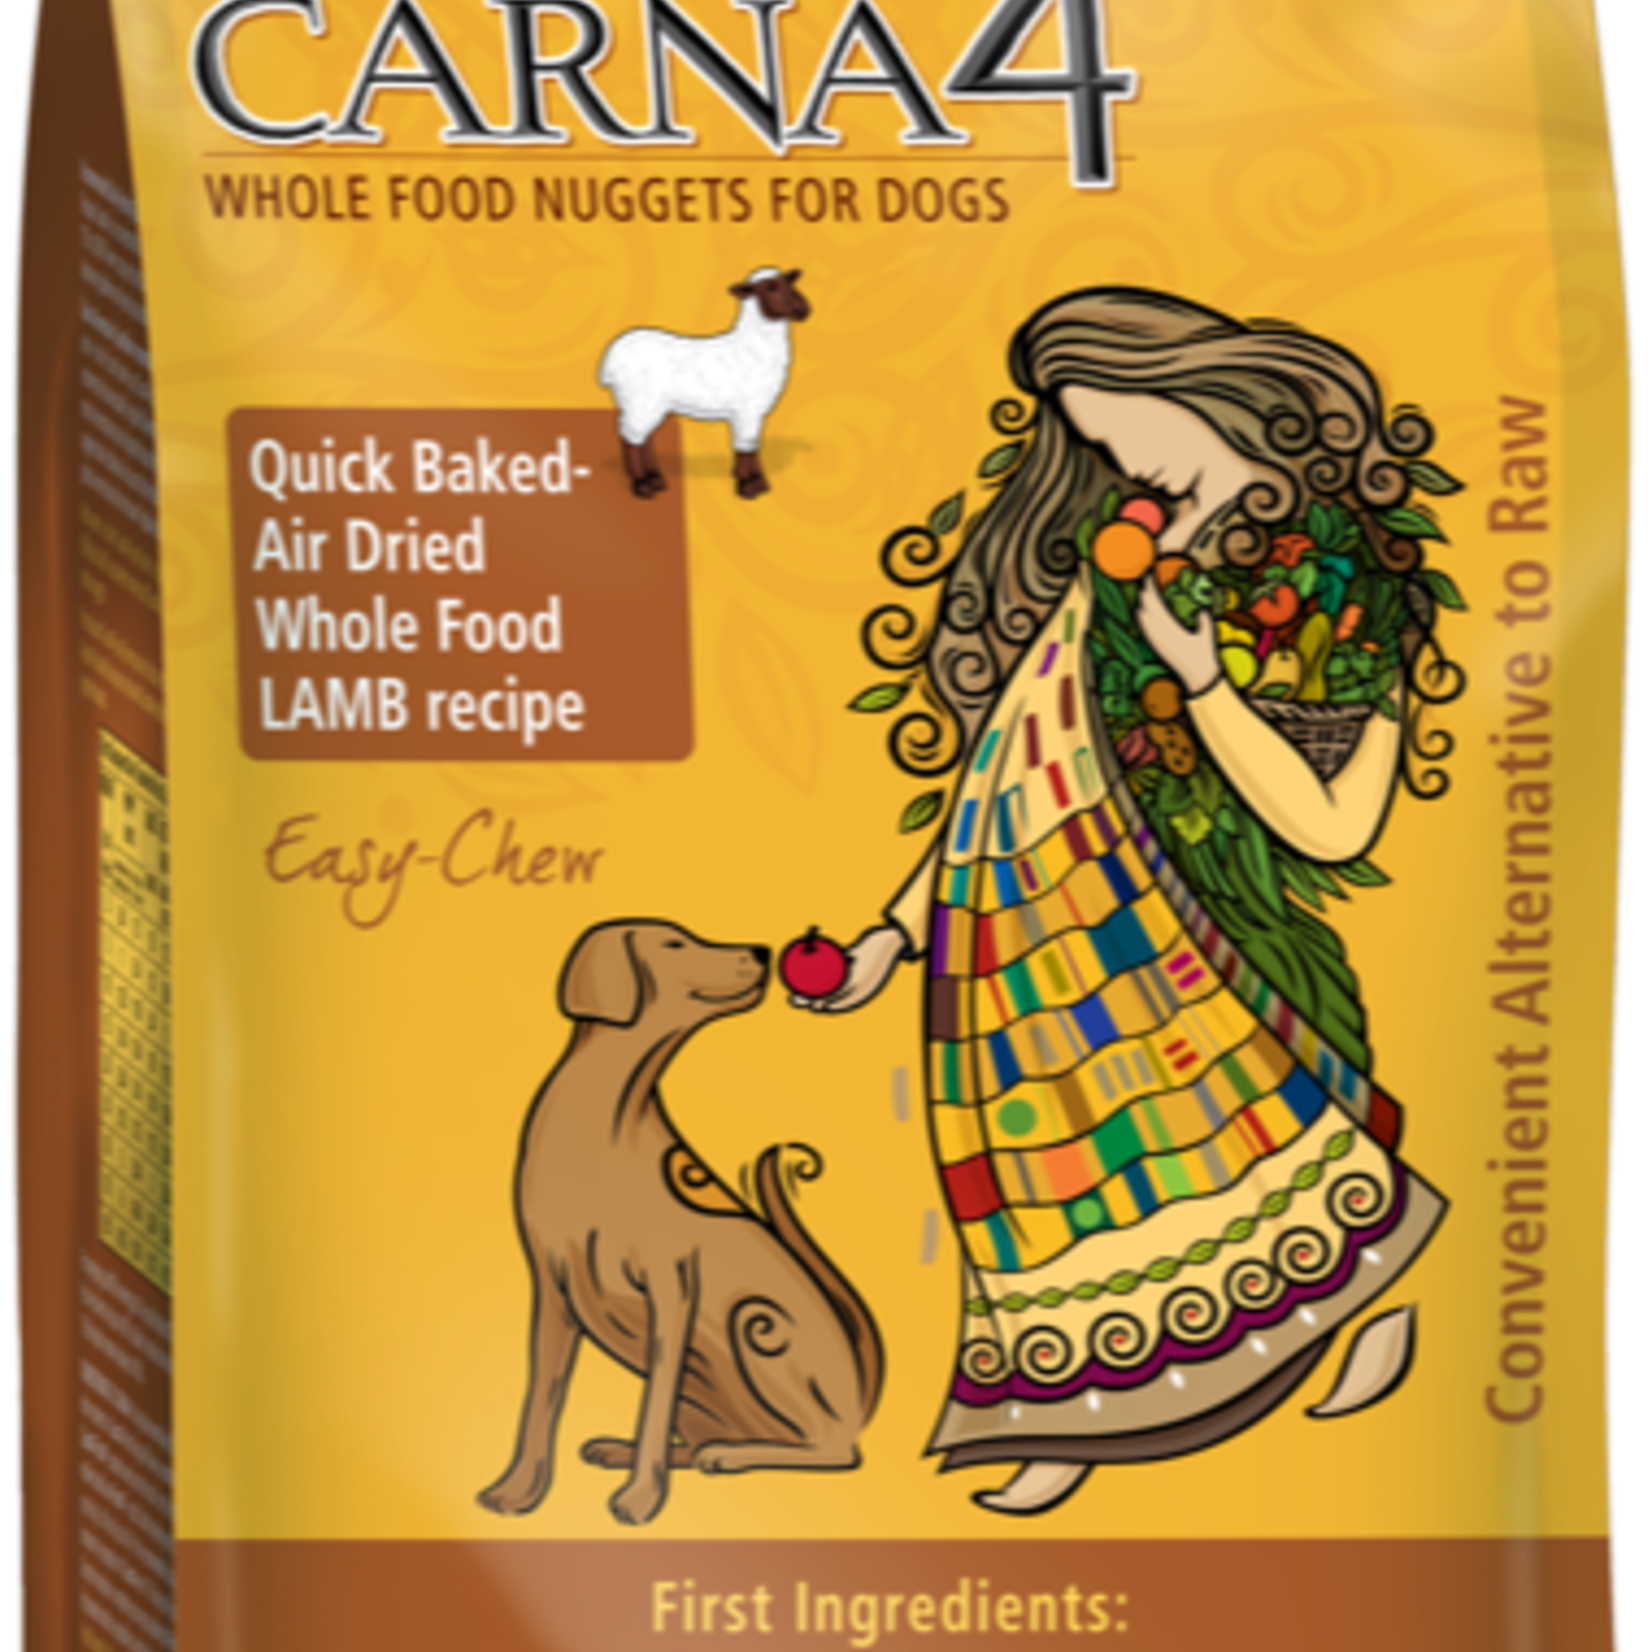 CARNA4 Easy Chew Lamb